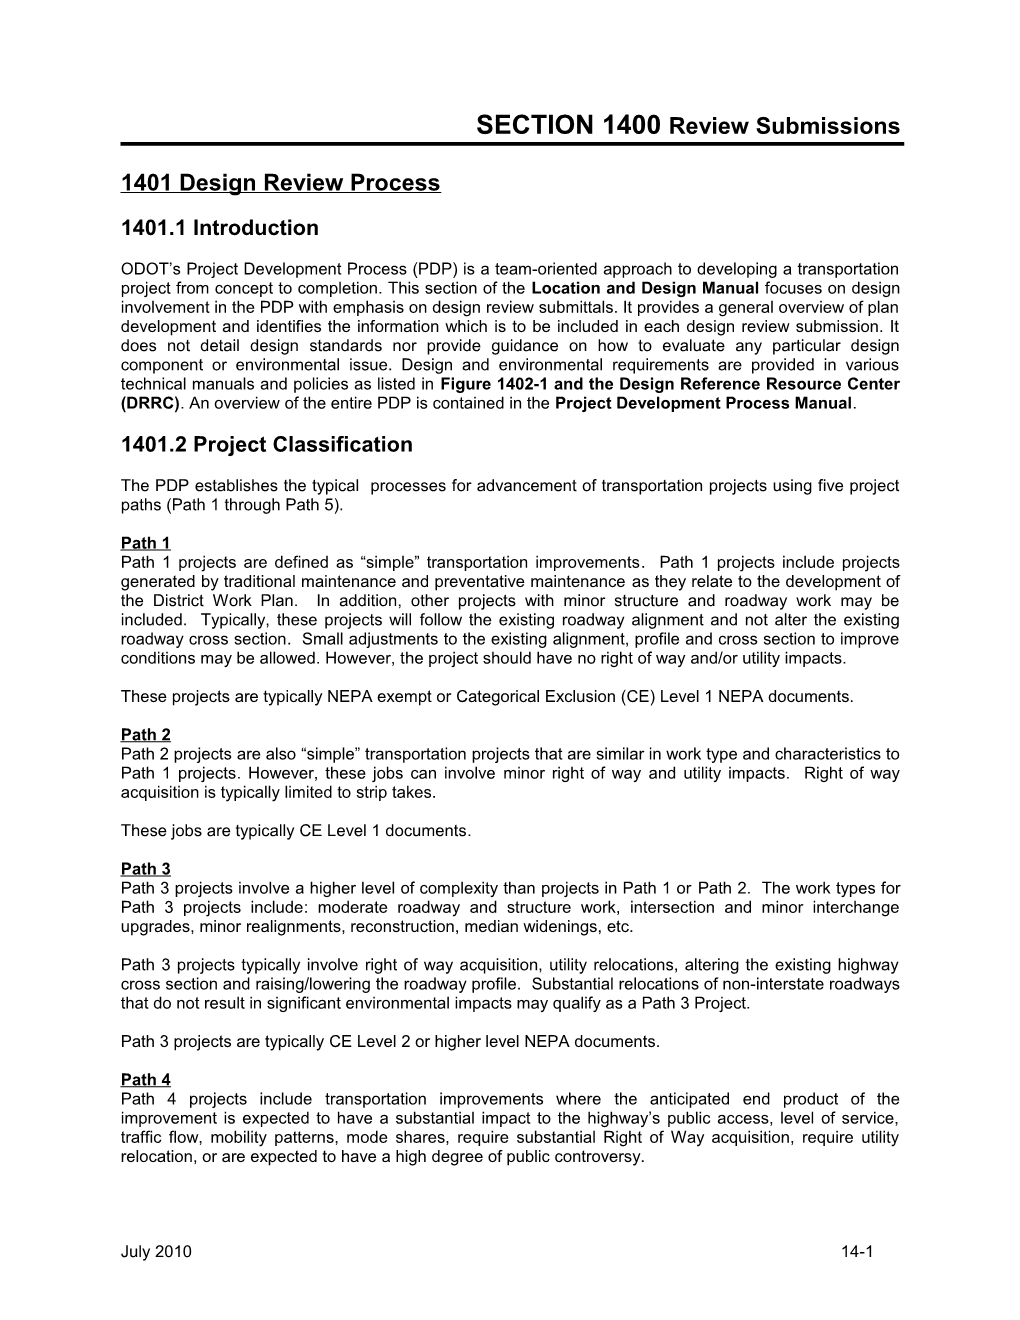 1401 Design Review Process